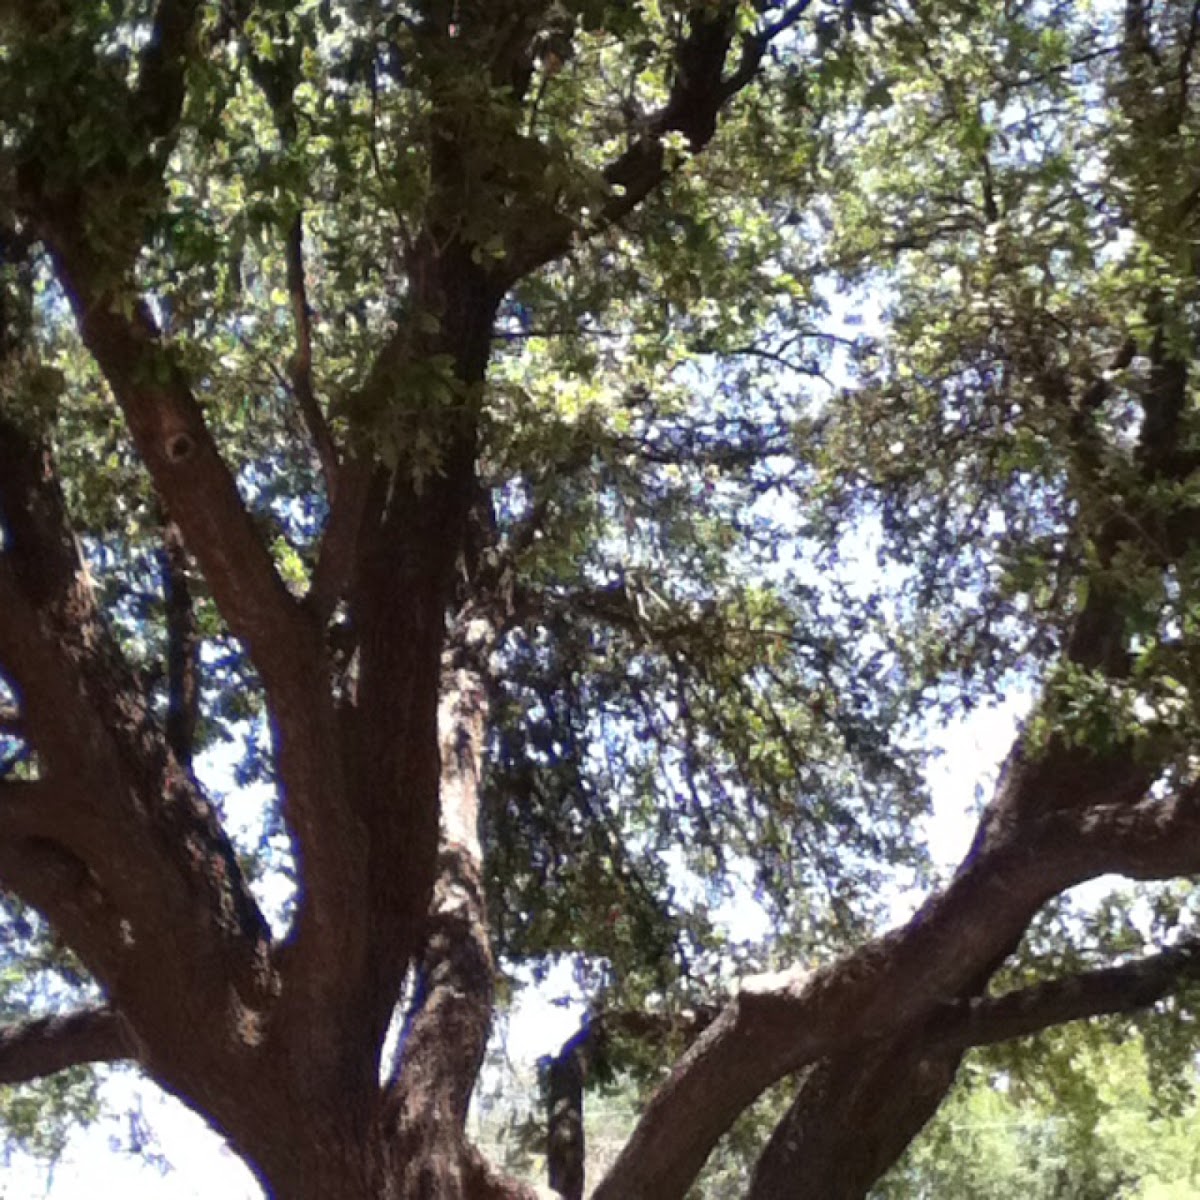 Texas live oak